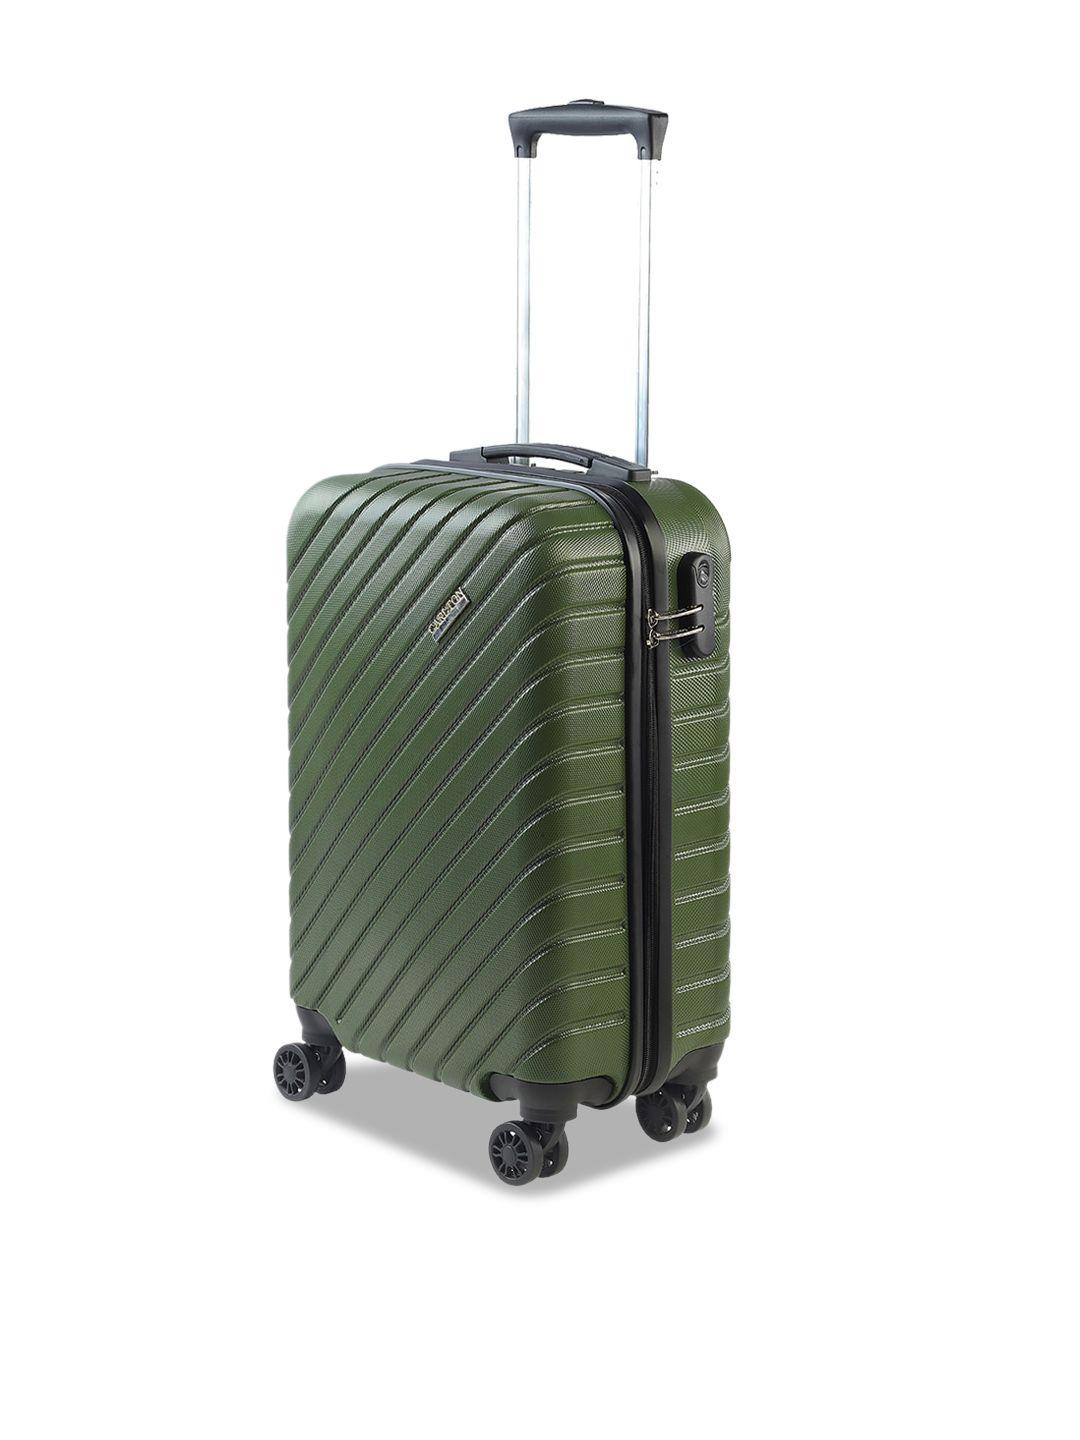 carlton-london-hard-sided-360-degree-rotation-cabin-trolley-suitcase